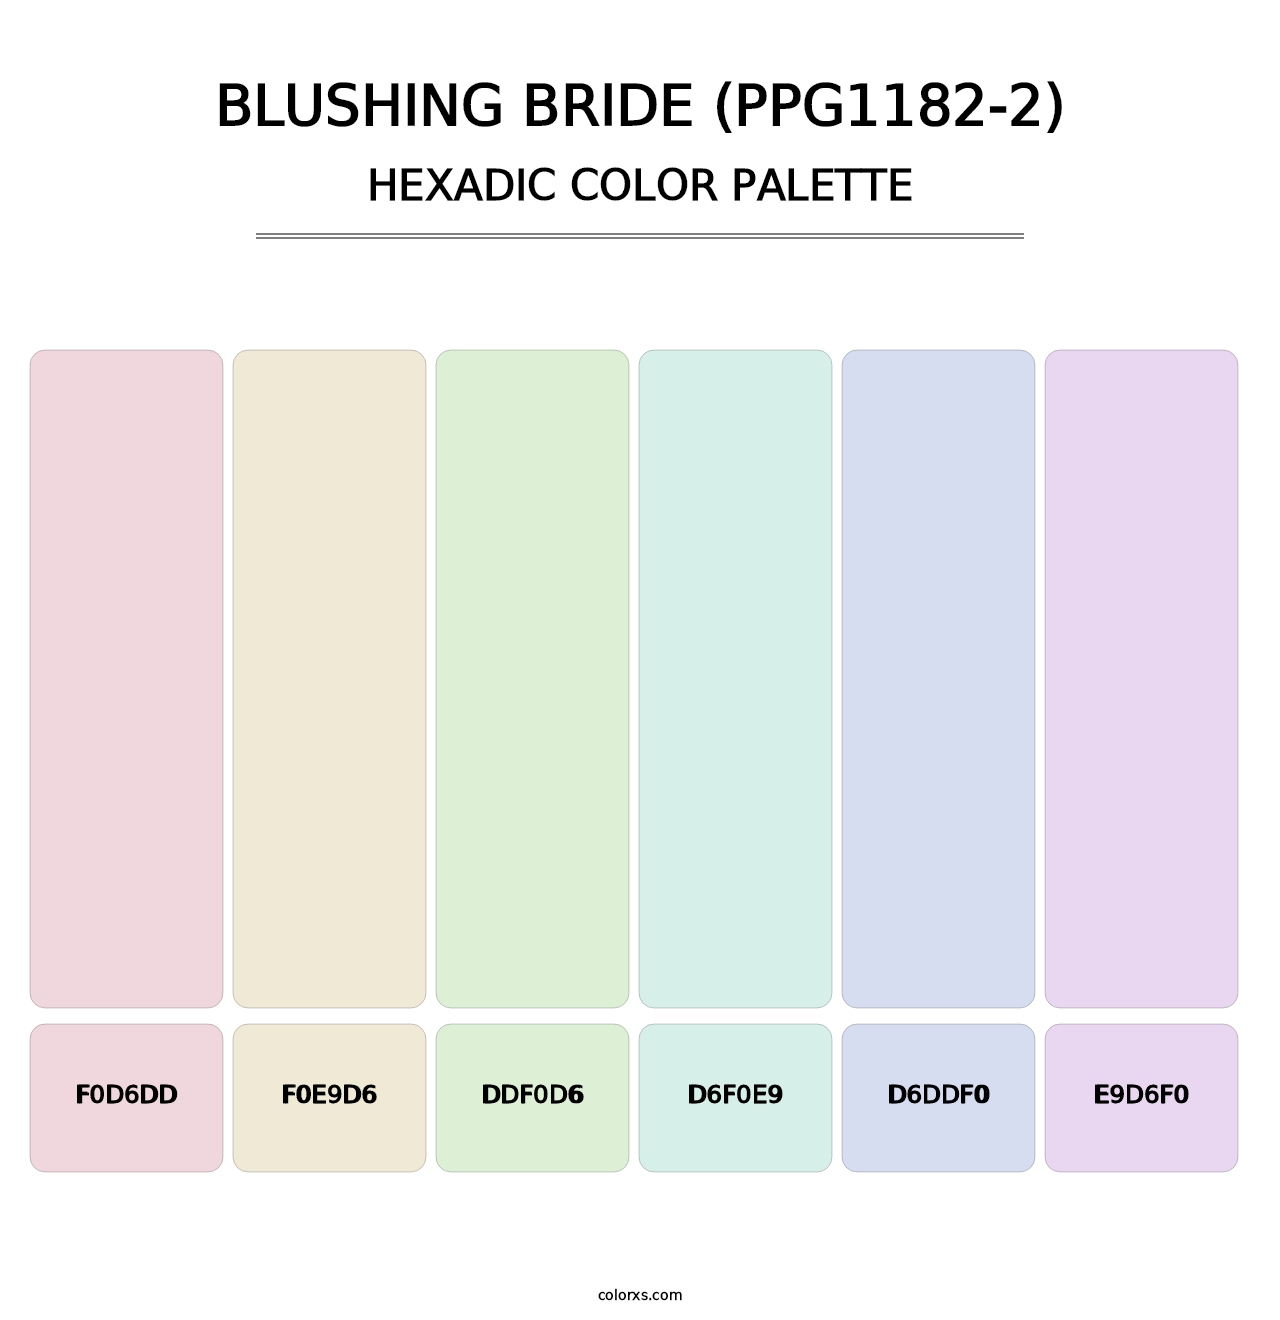 Blushing Bride (PPG1182-2) - Hexadic Color Palette